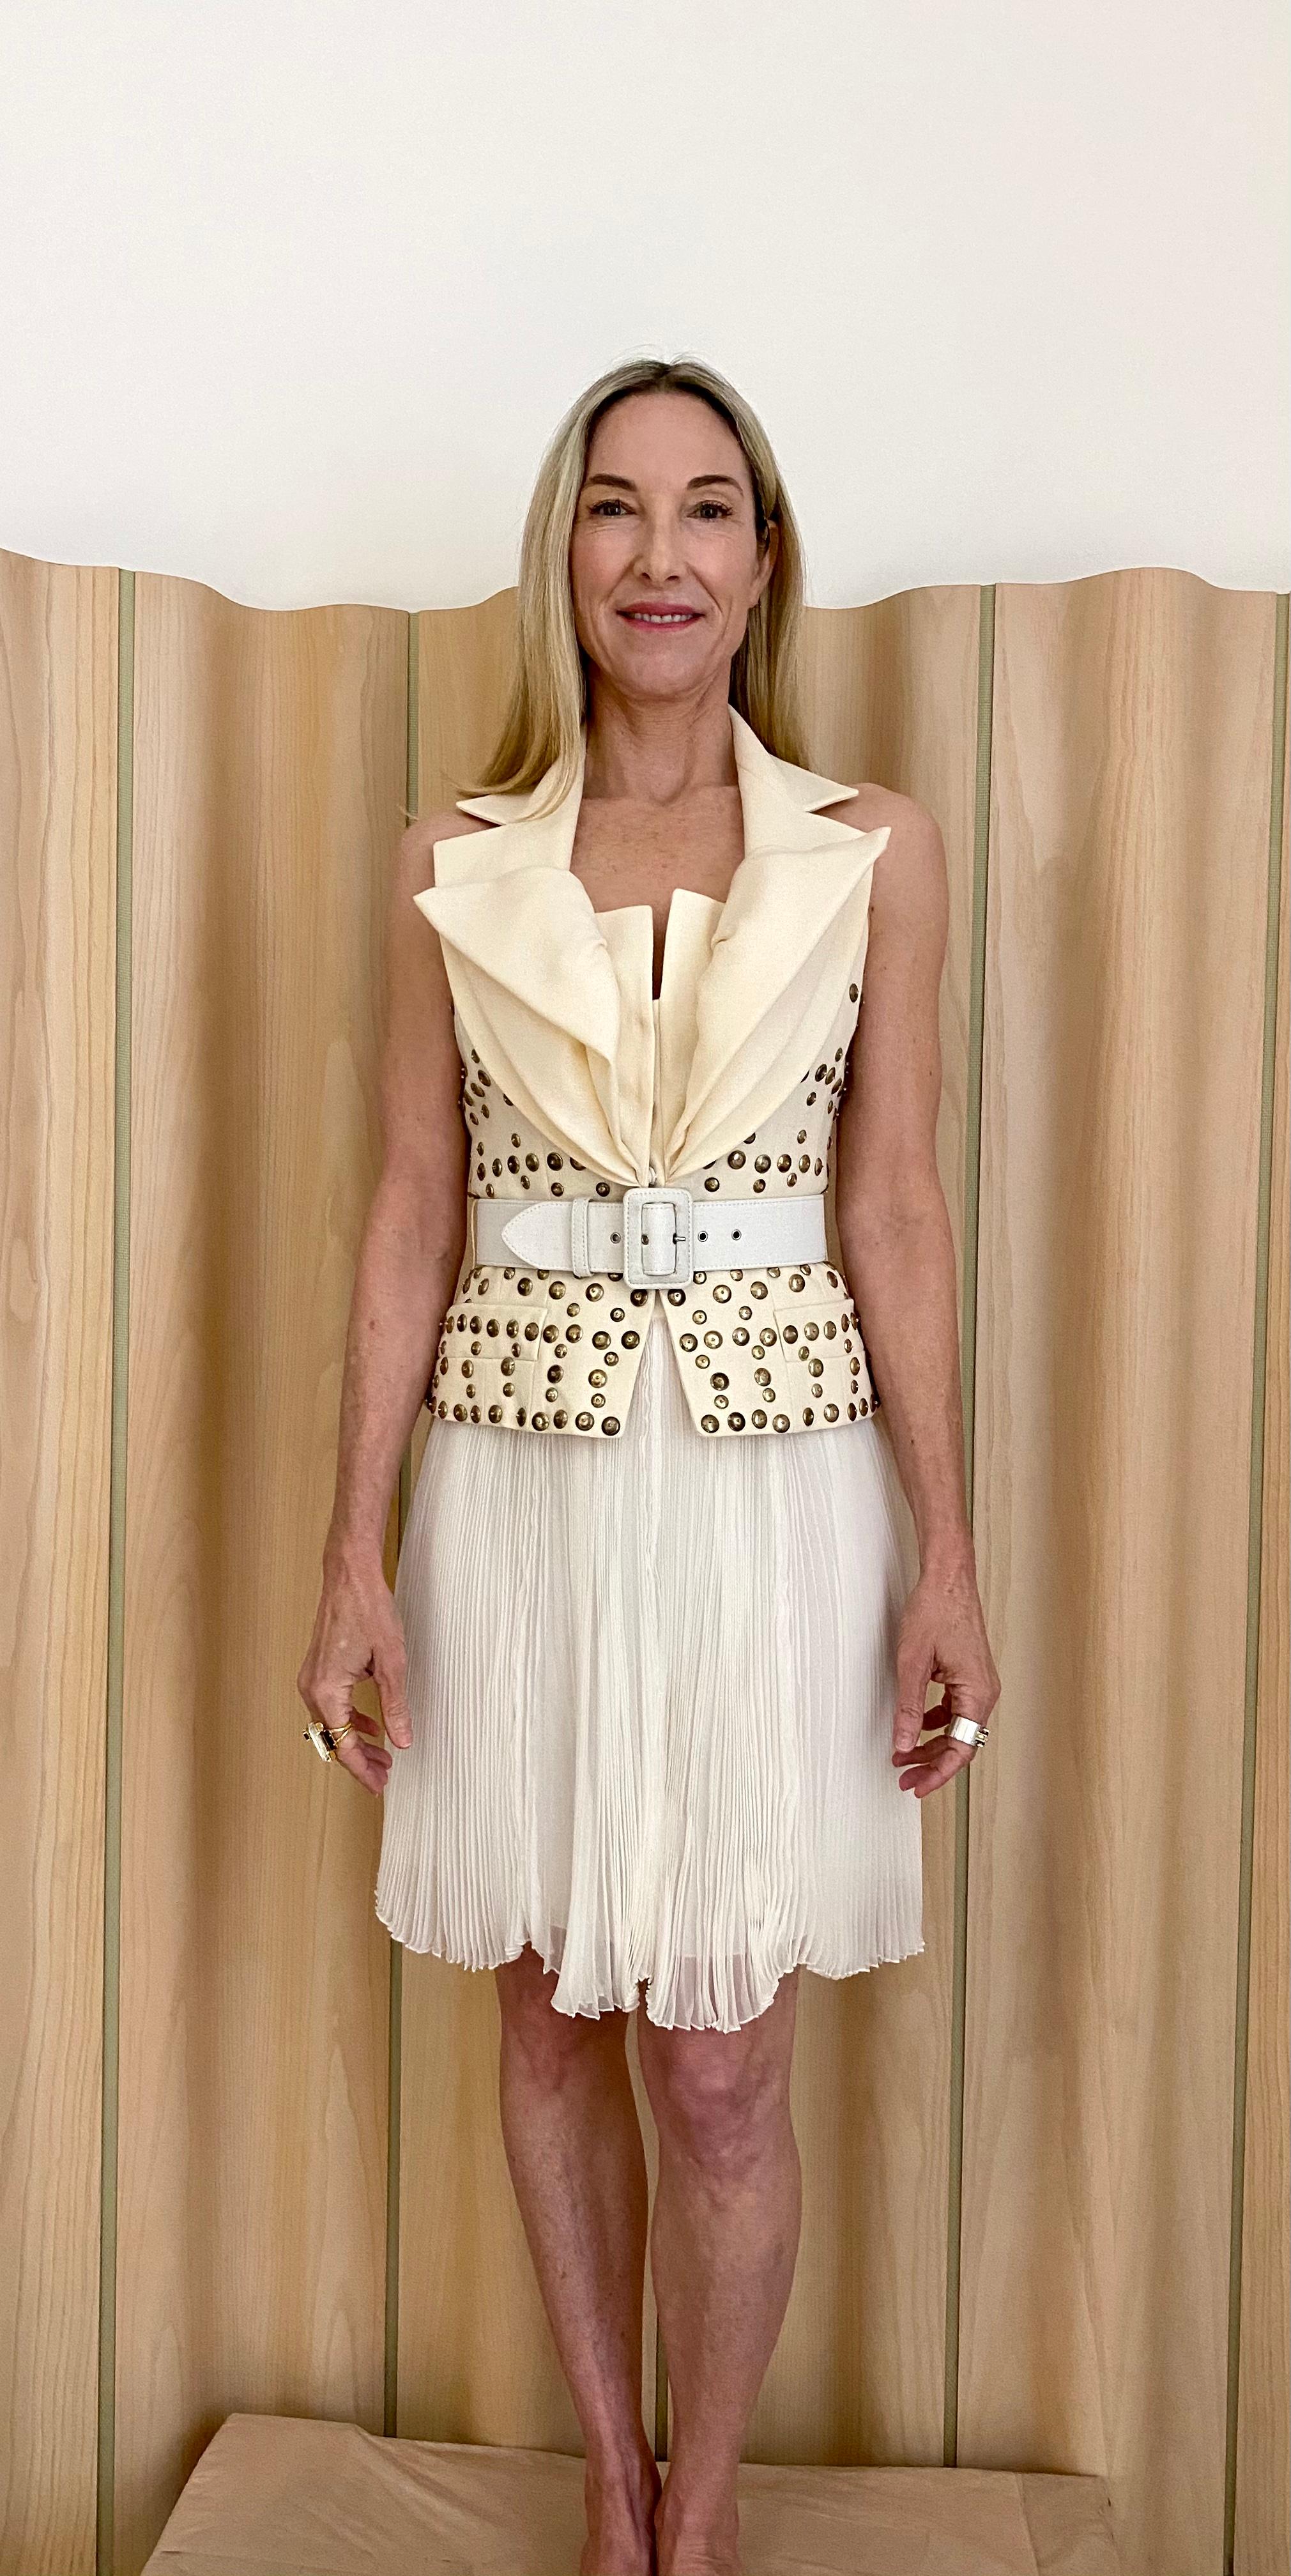 Women's Christian Dior John Galliano Ivory Halter Studded Top and Plisse Skirt ensemble